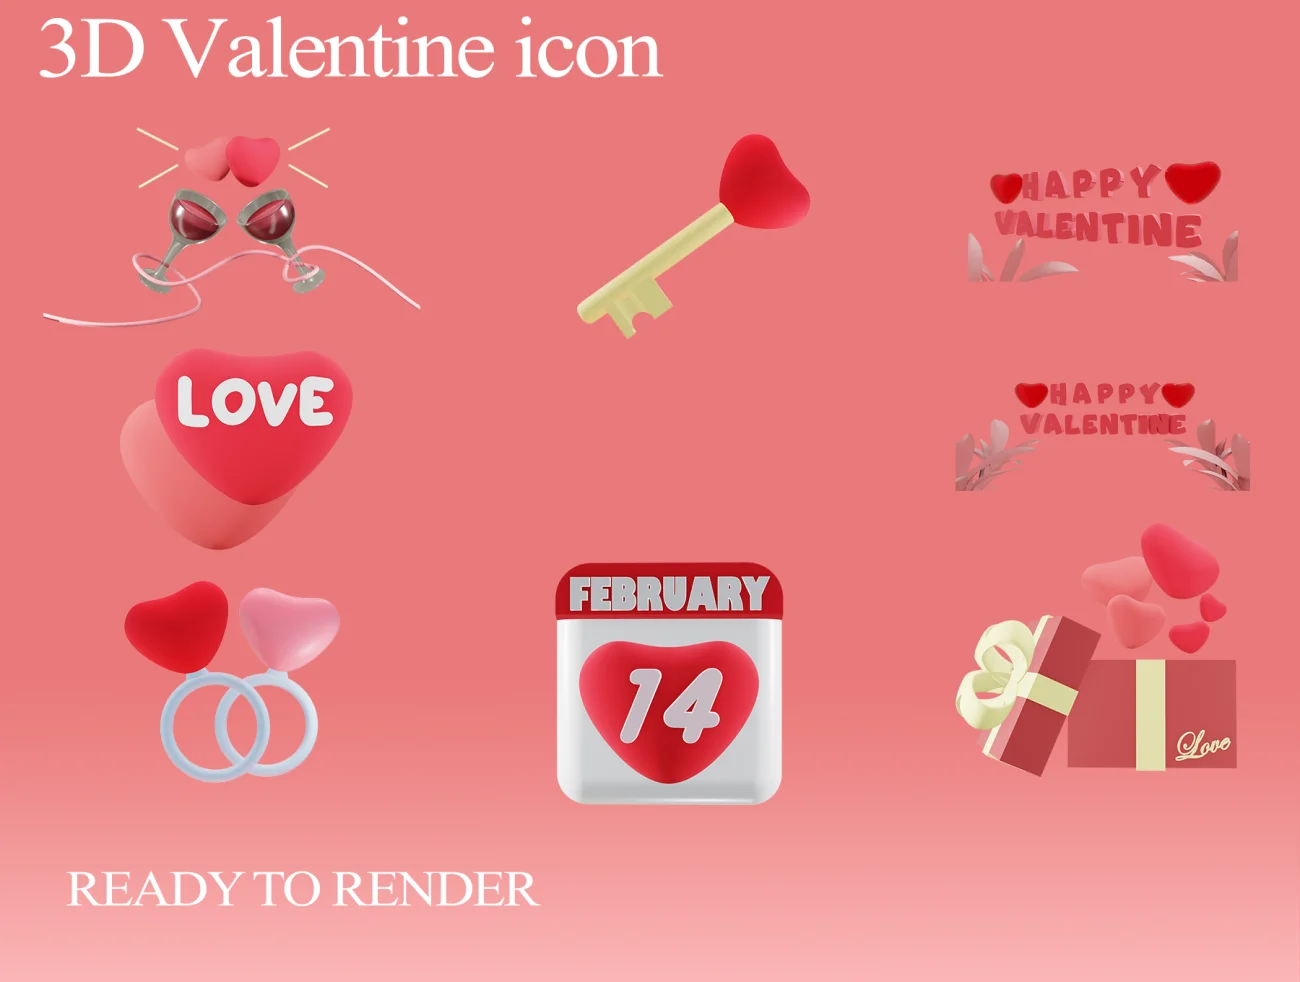 3D情人节图标素材下载 3D Valentine Icon .blender .png插图1